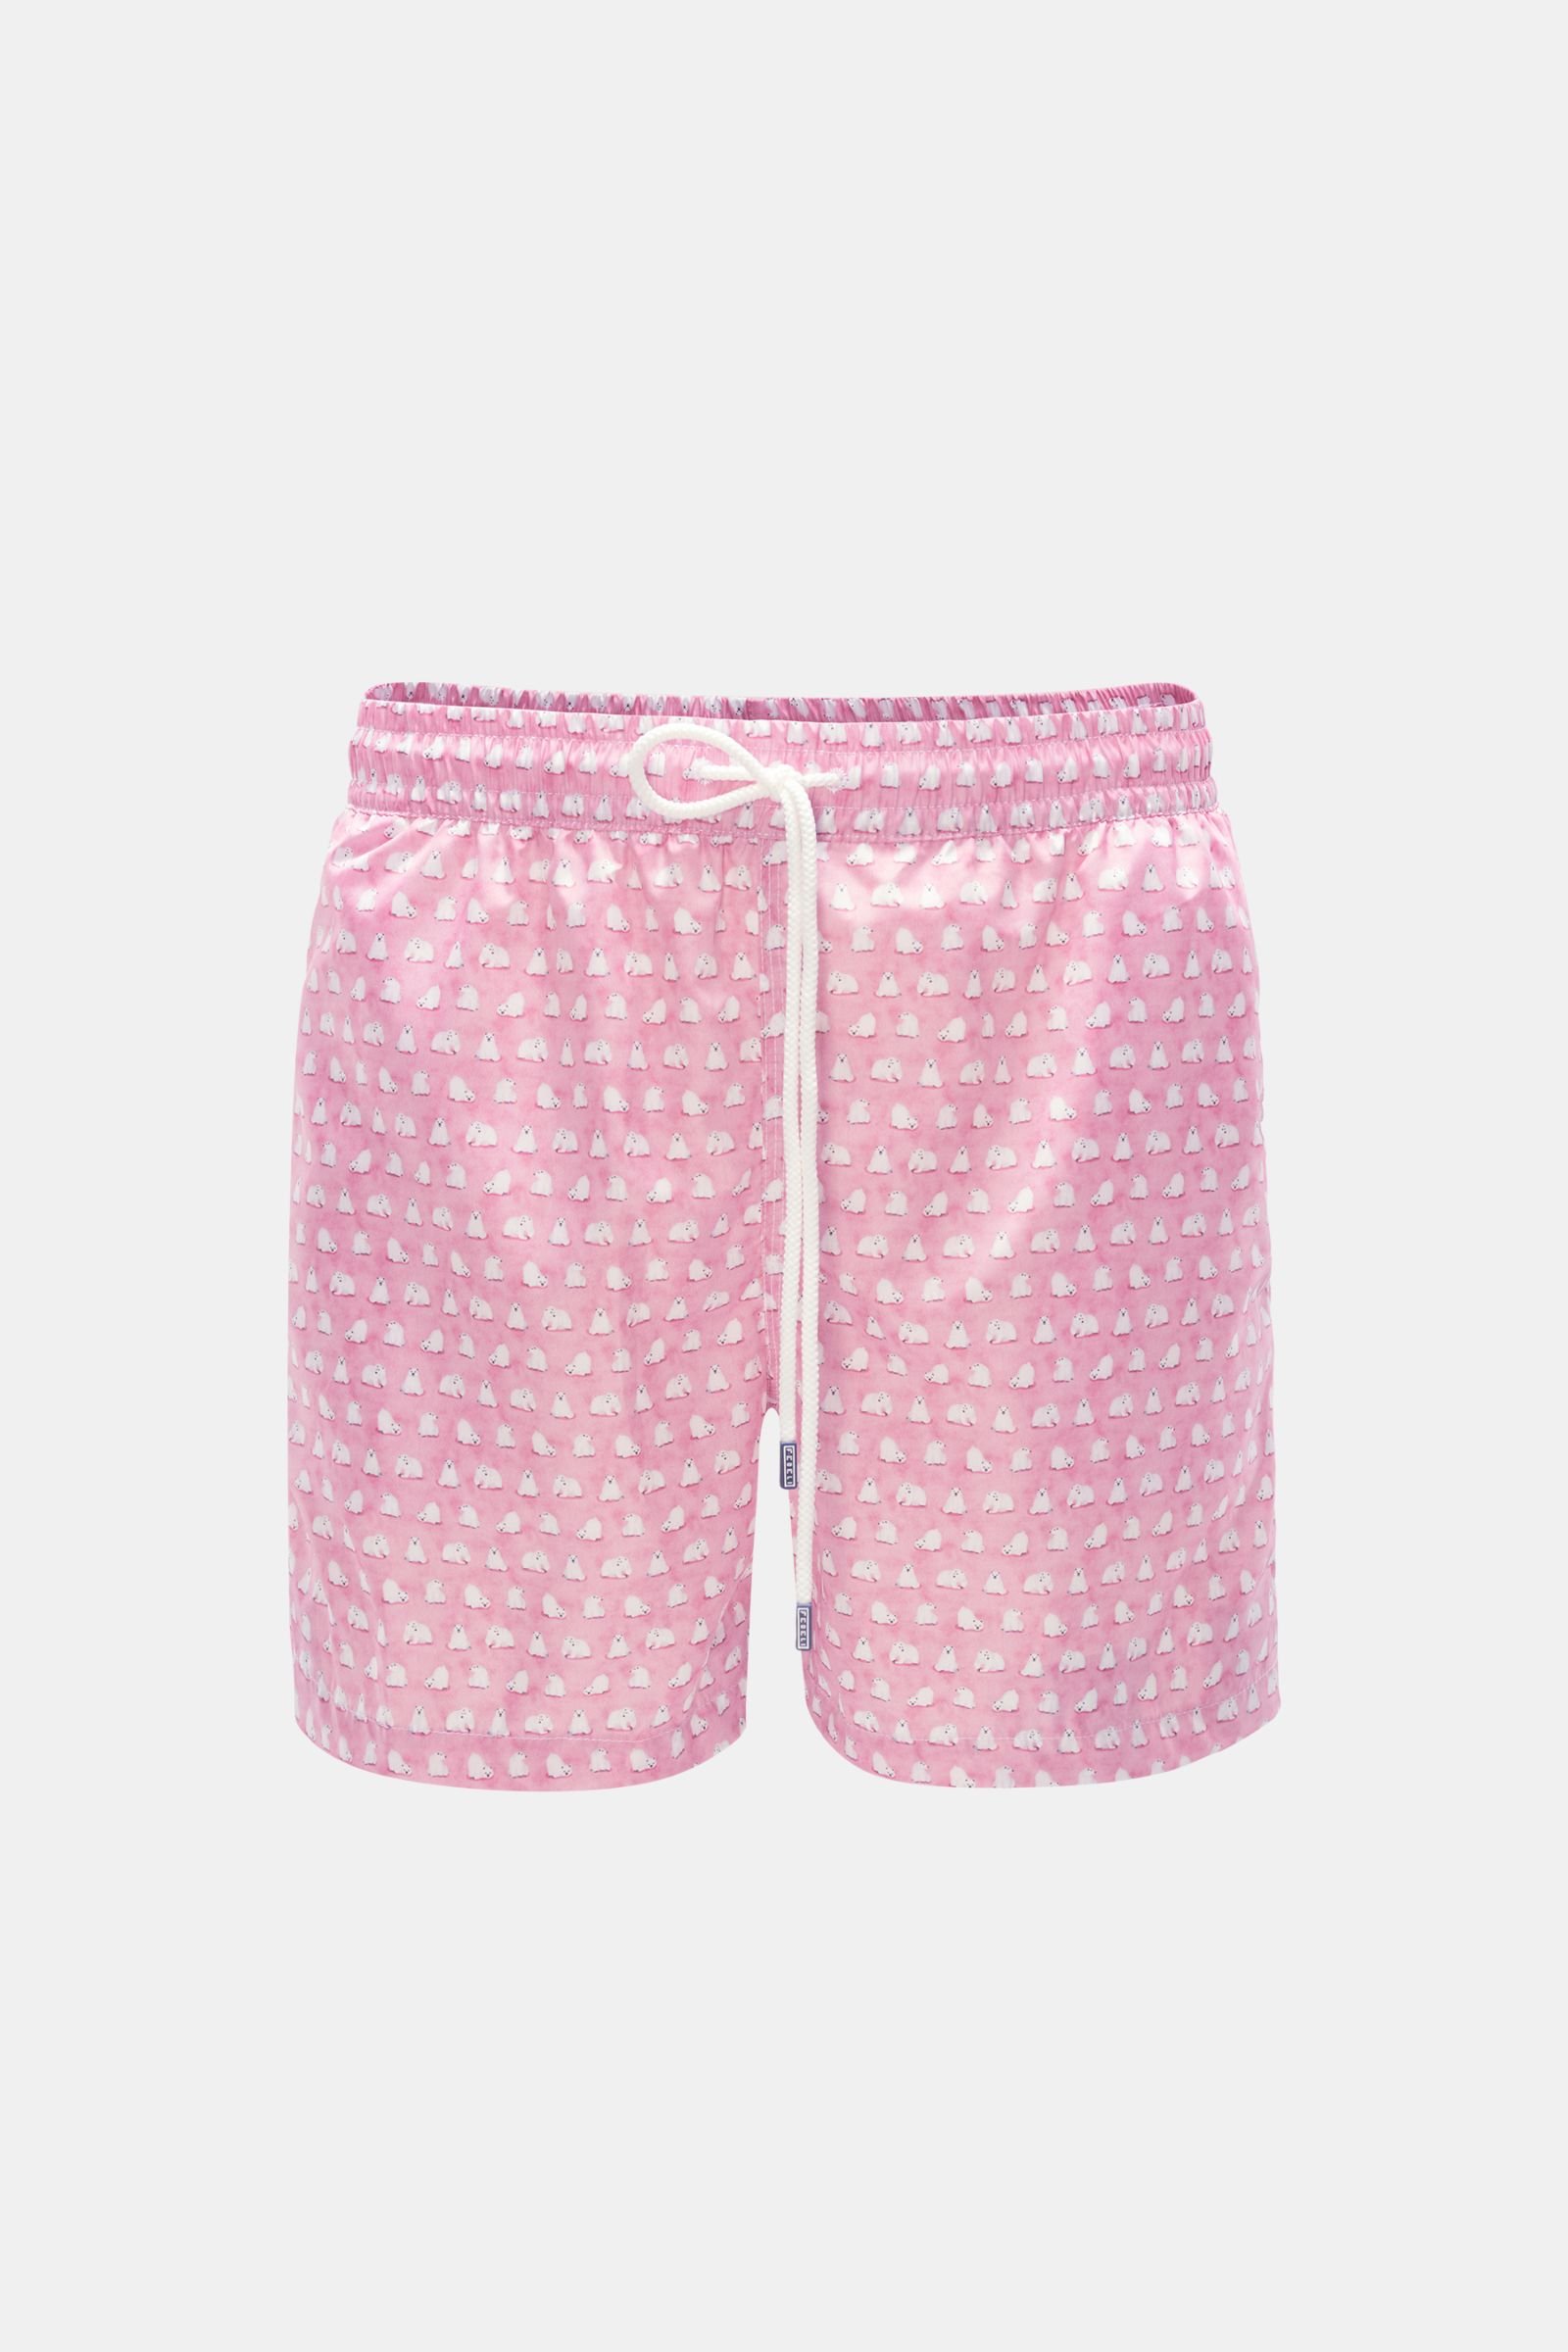 Swim shorts 'Madeira Airstop' rose/white patterned